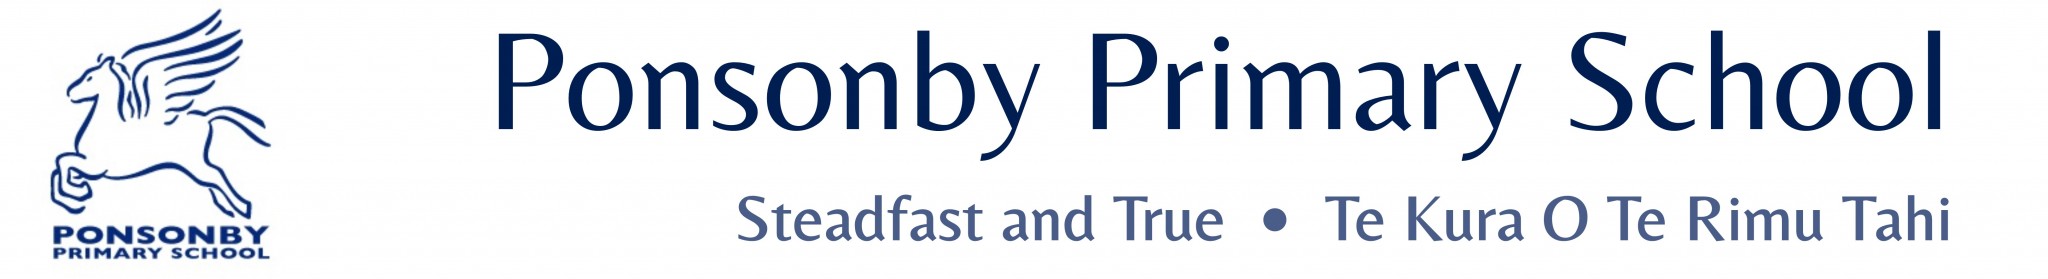 Ponsonby Primary School Logo